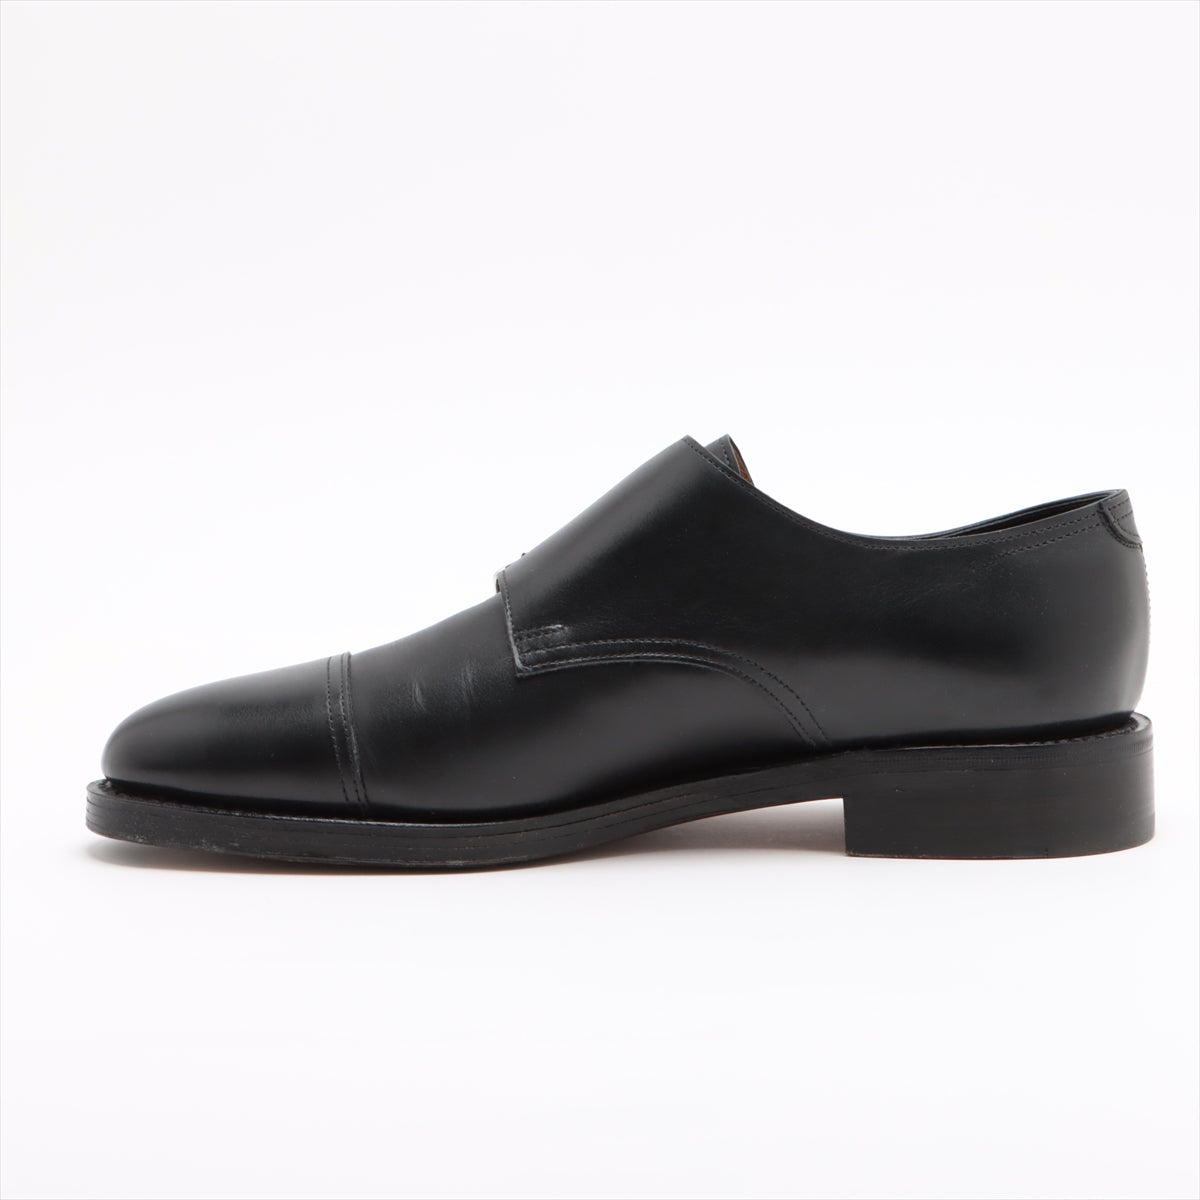 John Lobb Leather Dress shoes 6E Men's Black william Double monk strap